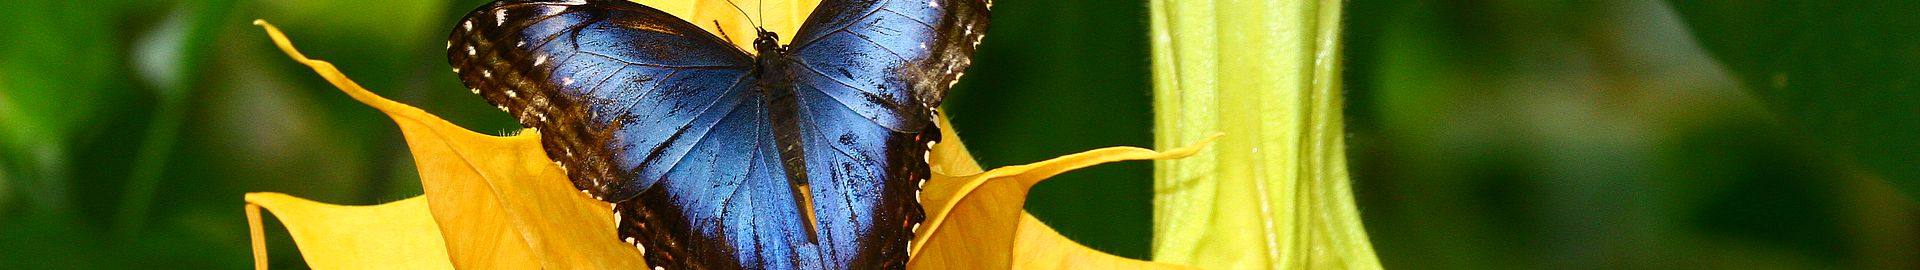 Der blaue Morpho-Schmetterling